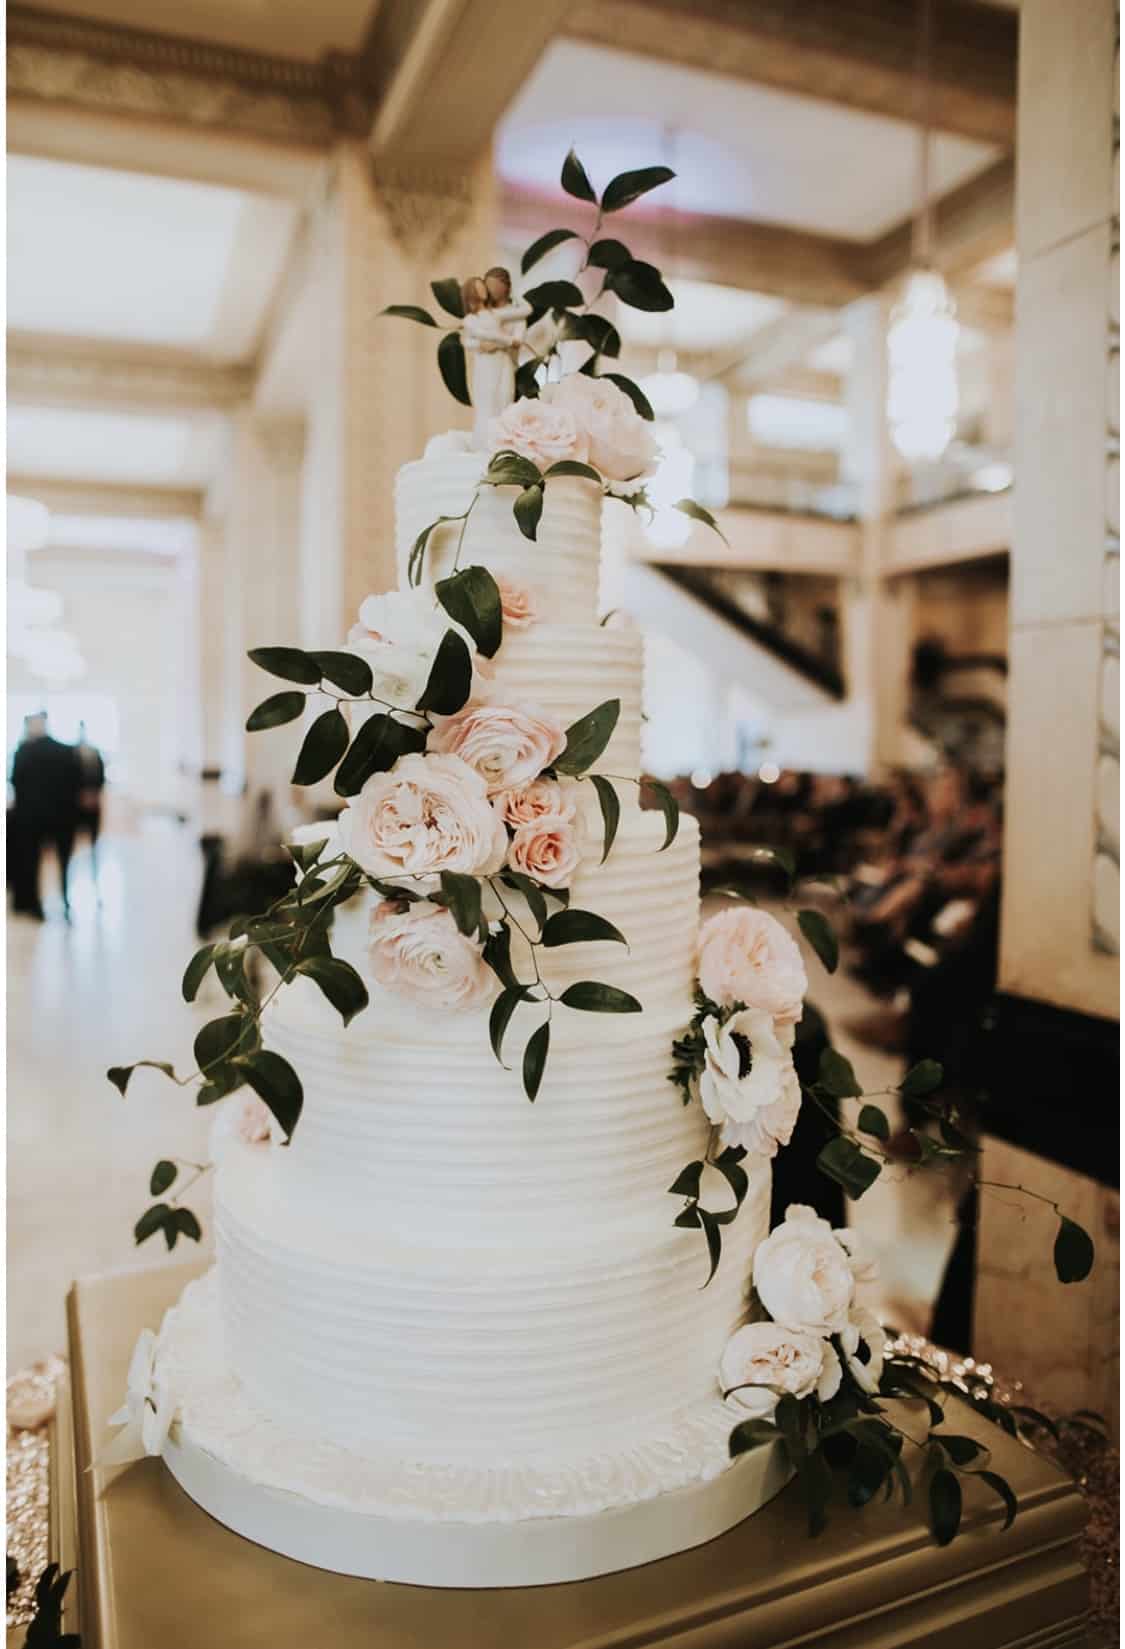 McCall cake wedding cake with flowers